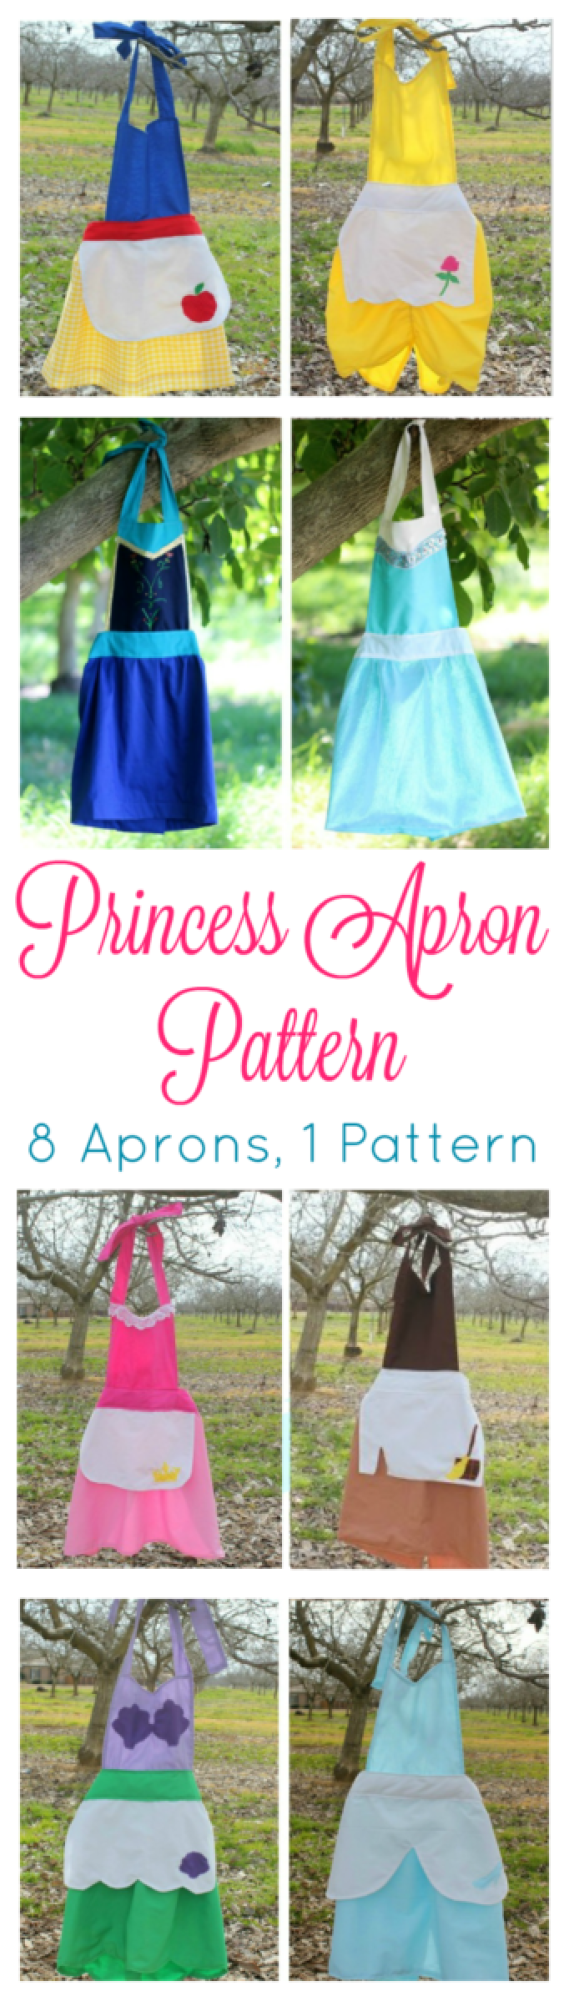 Enchanted Princess Pattern Apron in Disney Princess Style